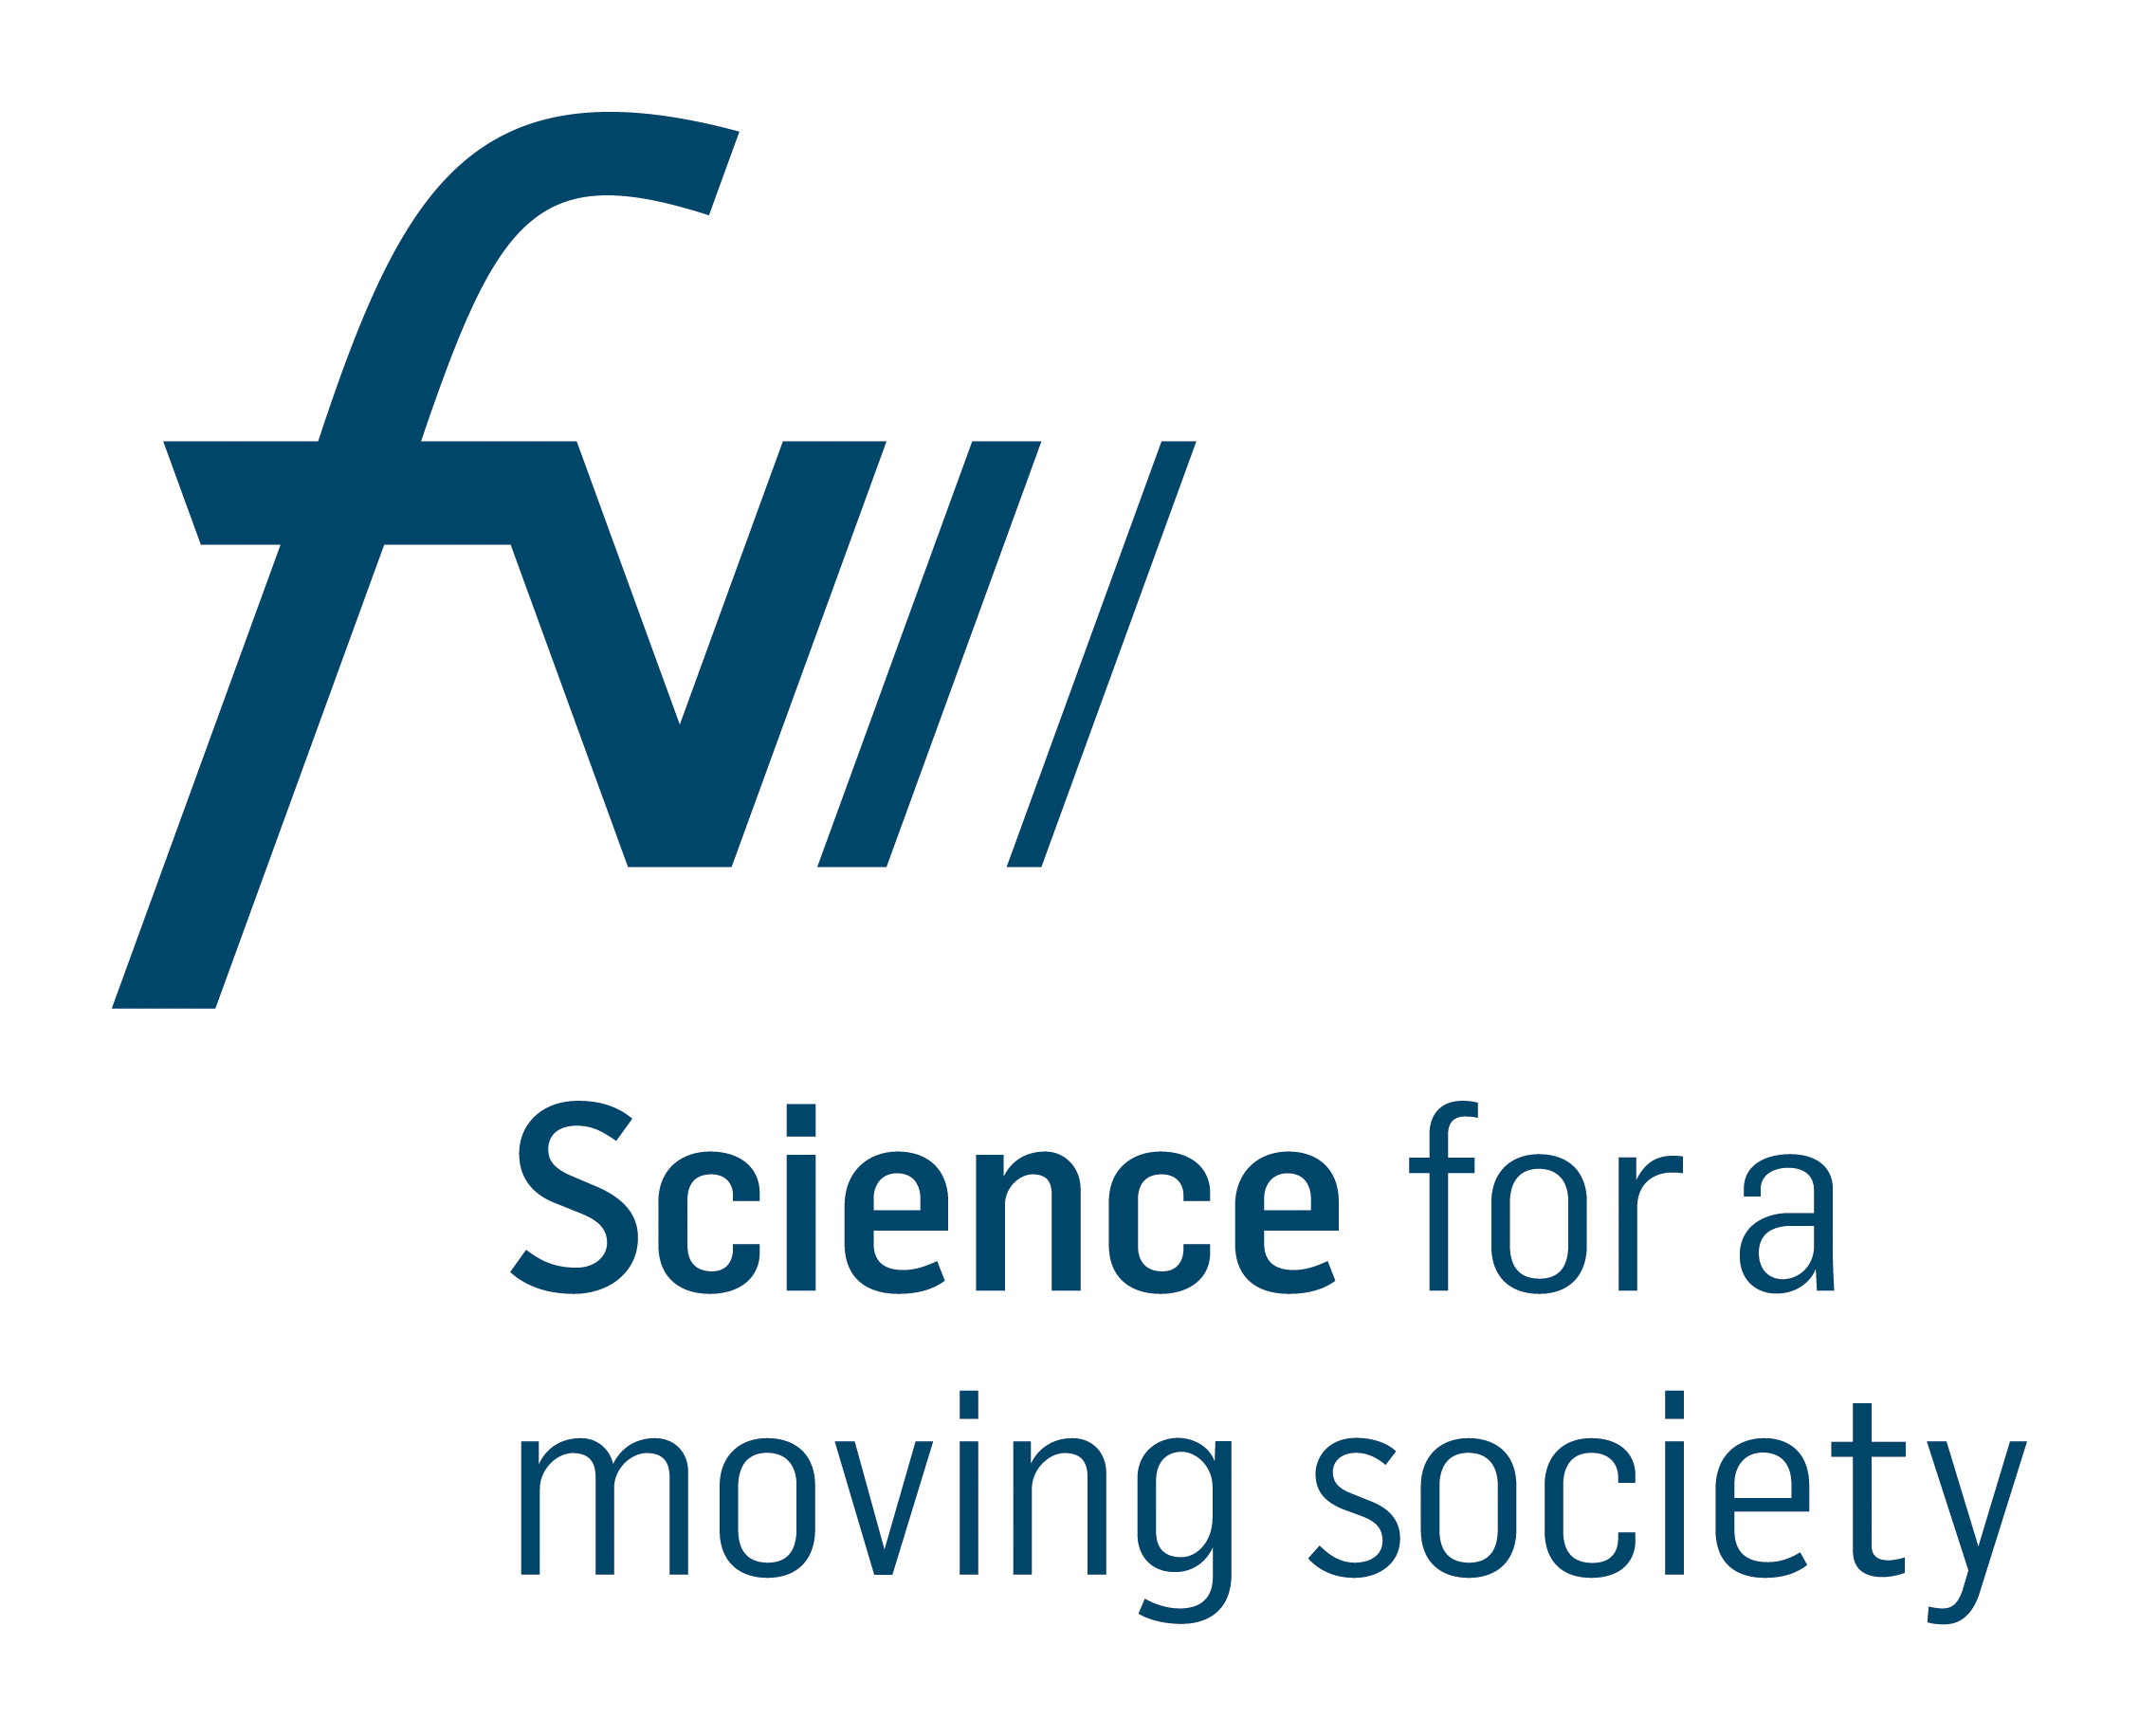 Die Buchstaben FVV mit dem Claim Science for a moving society.